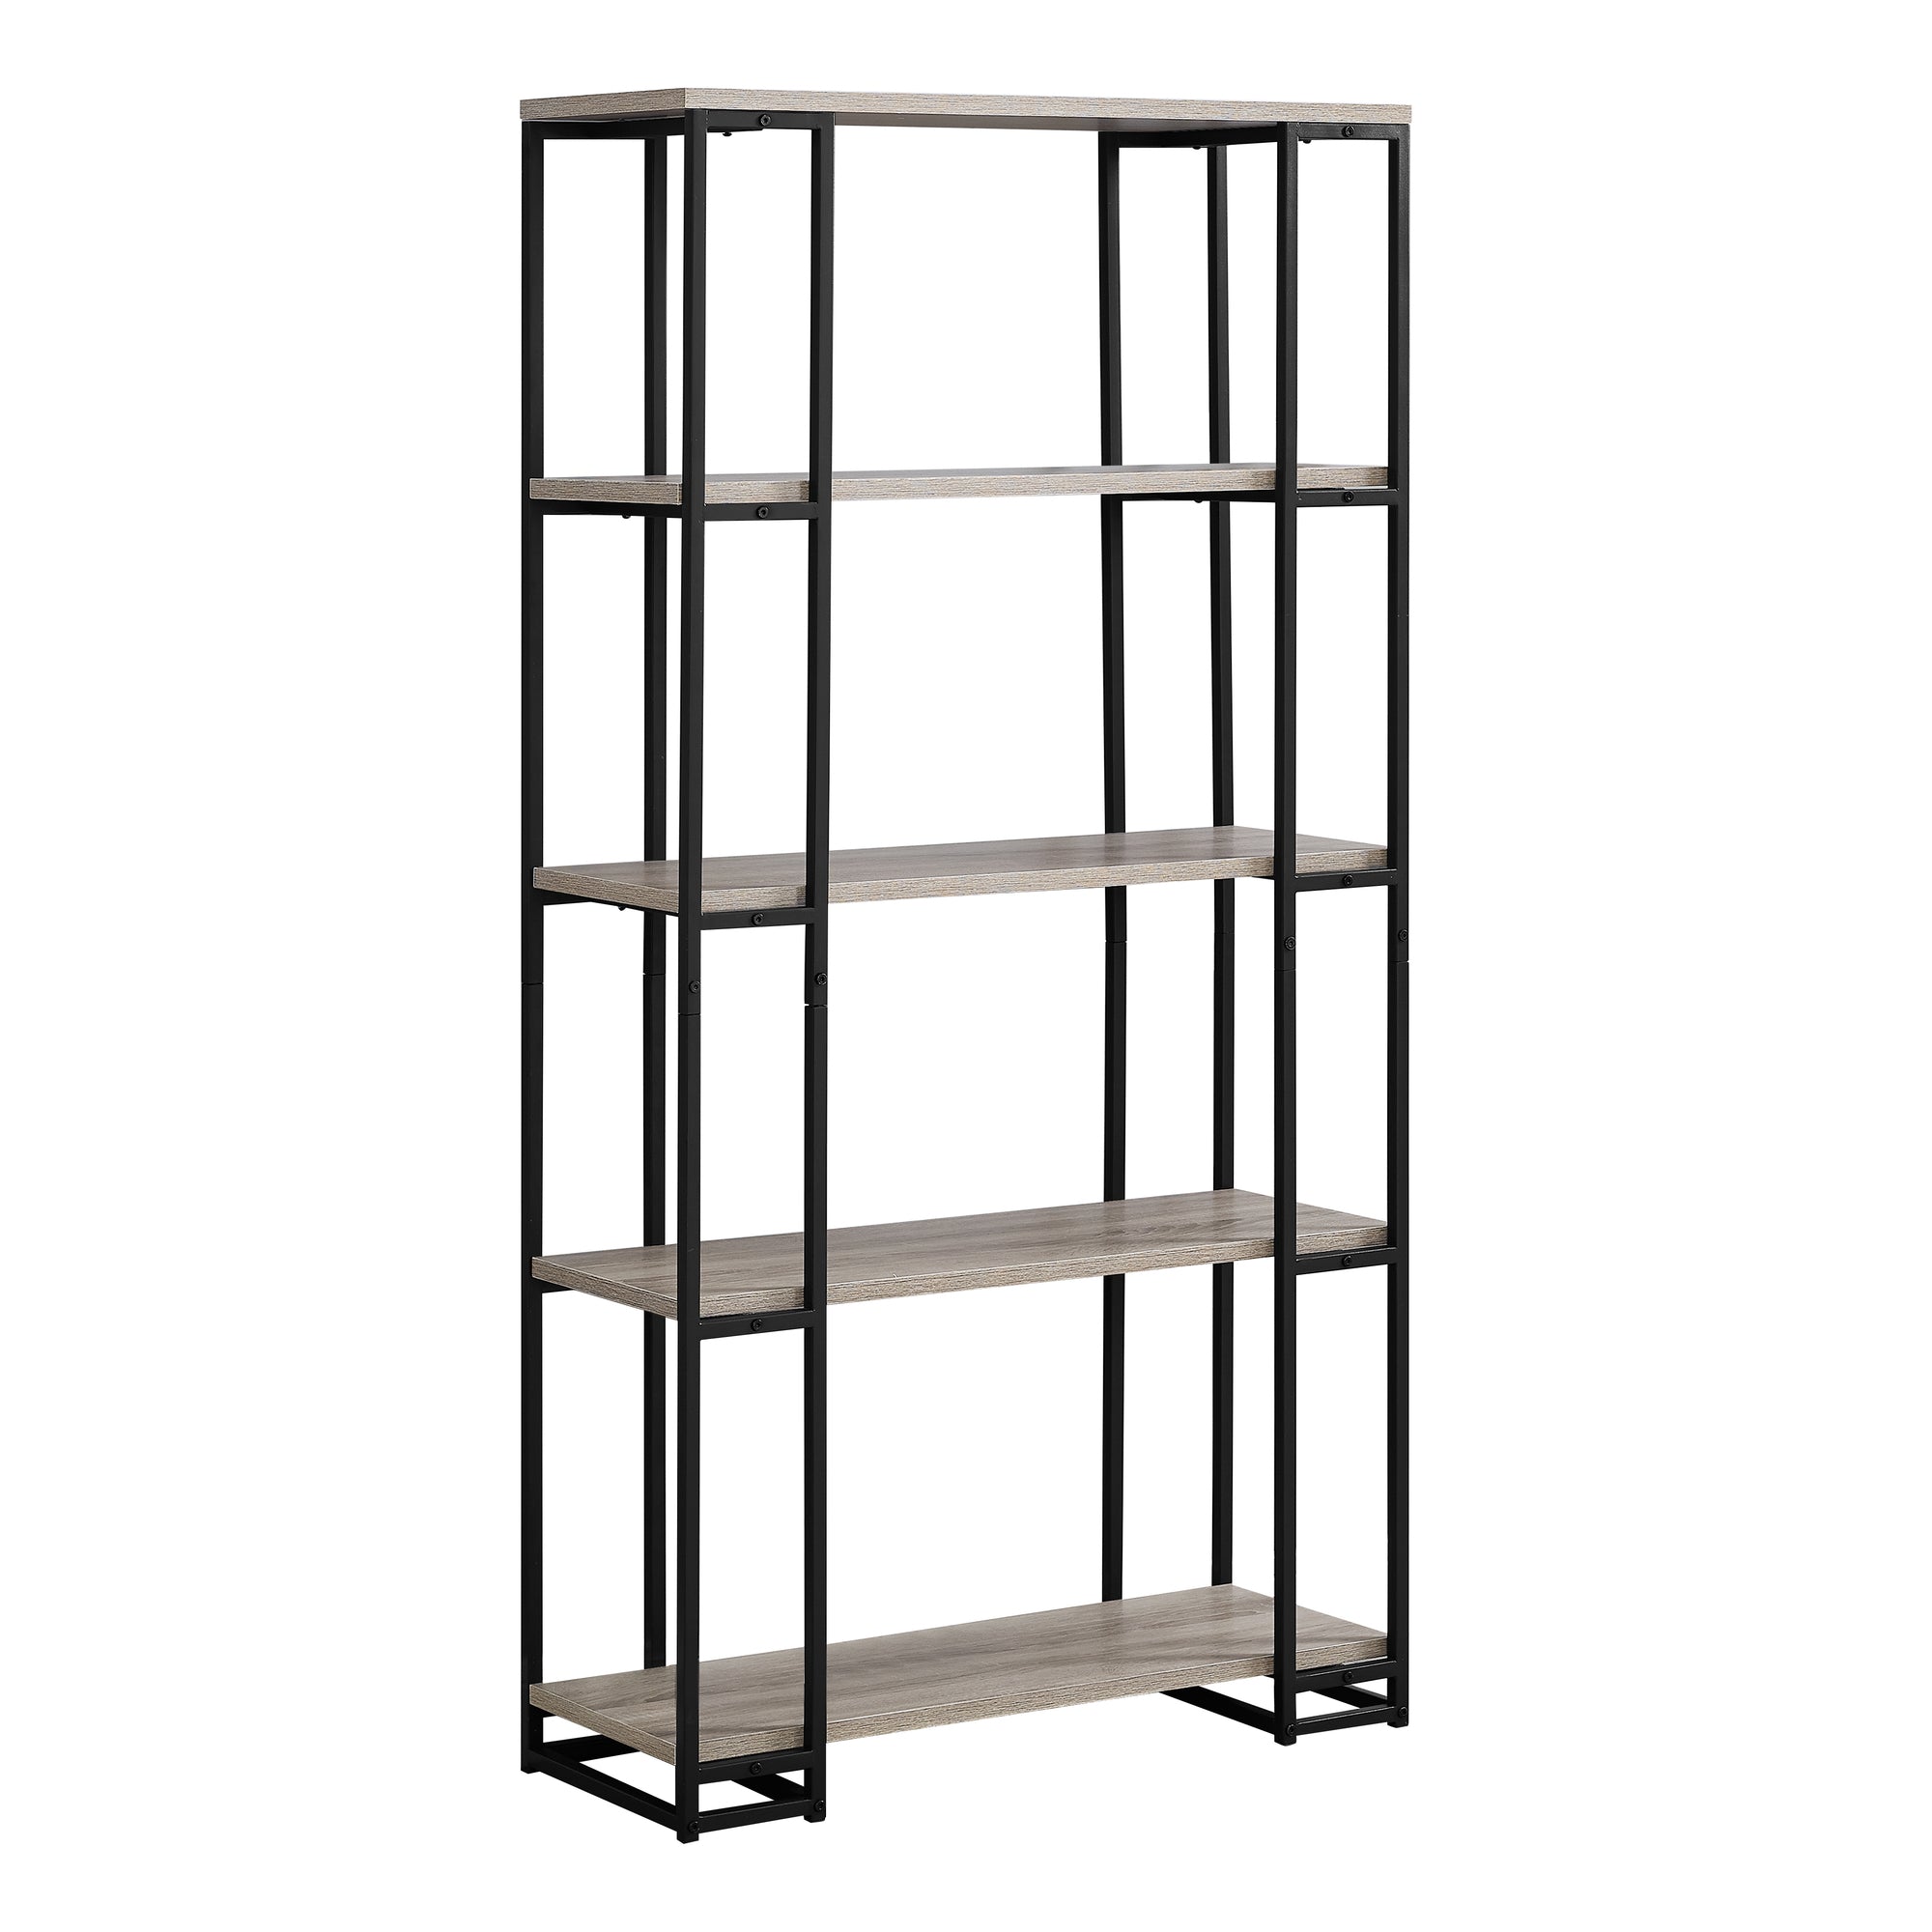 MN-637241    Bookshelf, Bookcase, Etagere, 5 Tier, 60"H, Office, Bedroom, Metal, Laminate, Dark Taupe, Black, Contemporary, Industrial, Modern